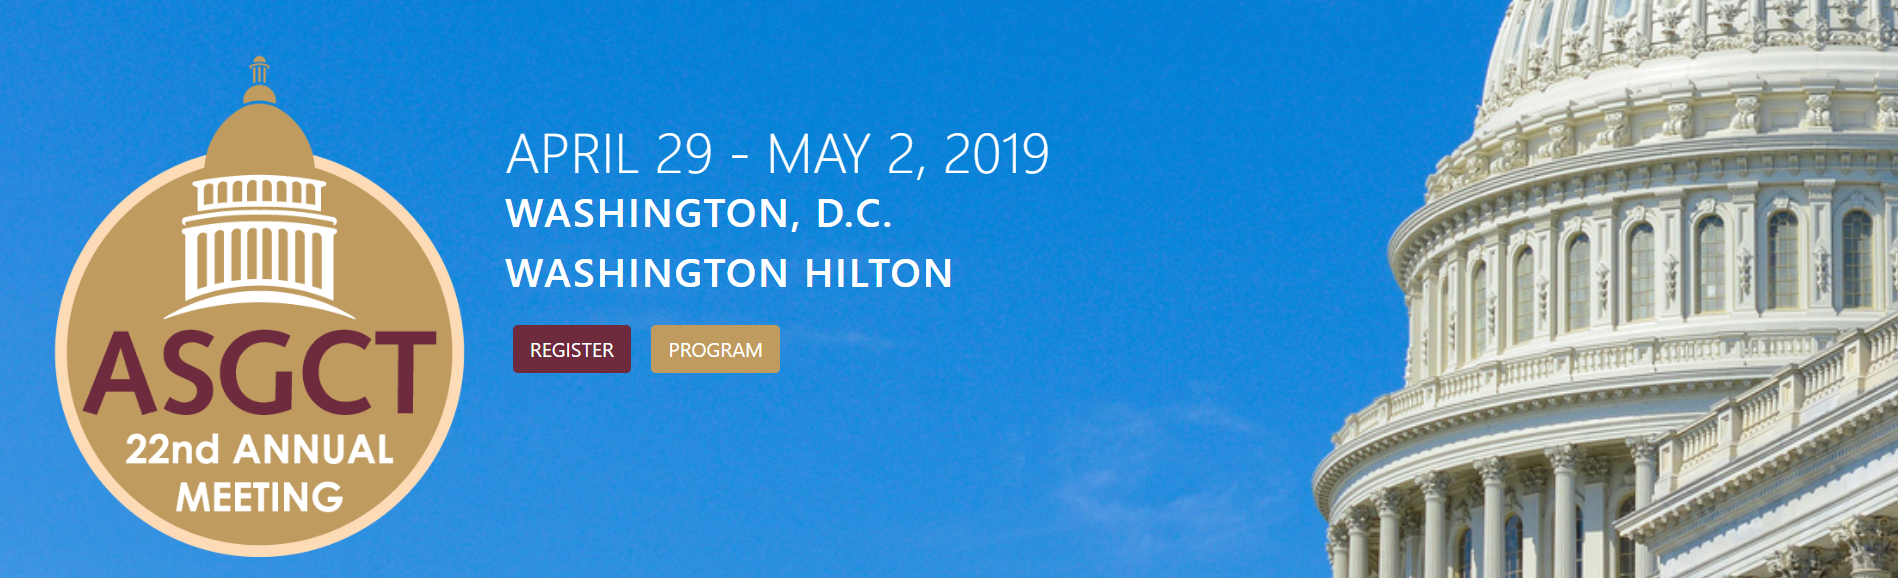 ASGCT annual meeting, Washington DC, April 29th- May 2nd, 2019